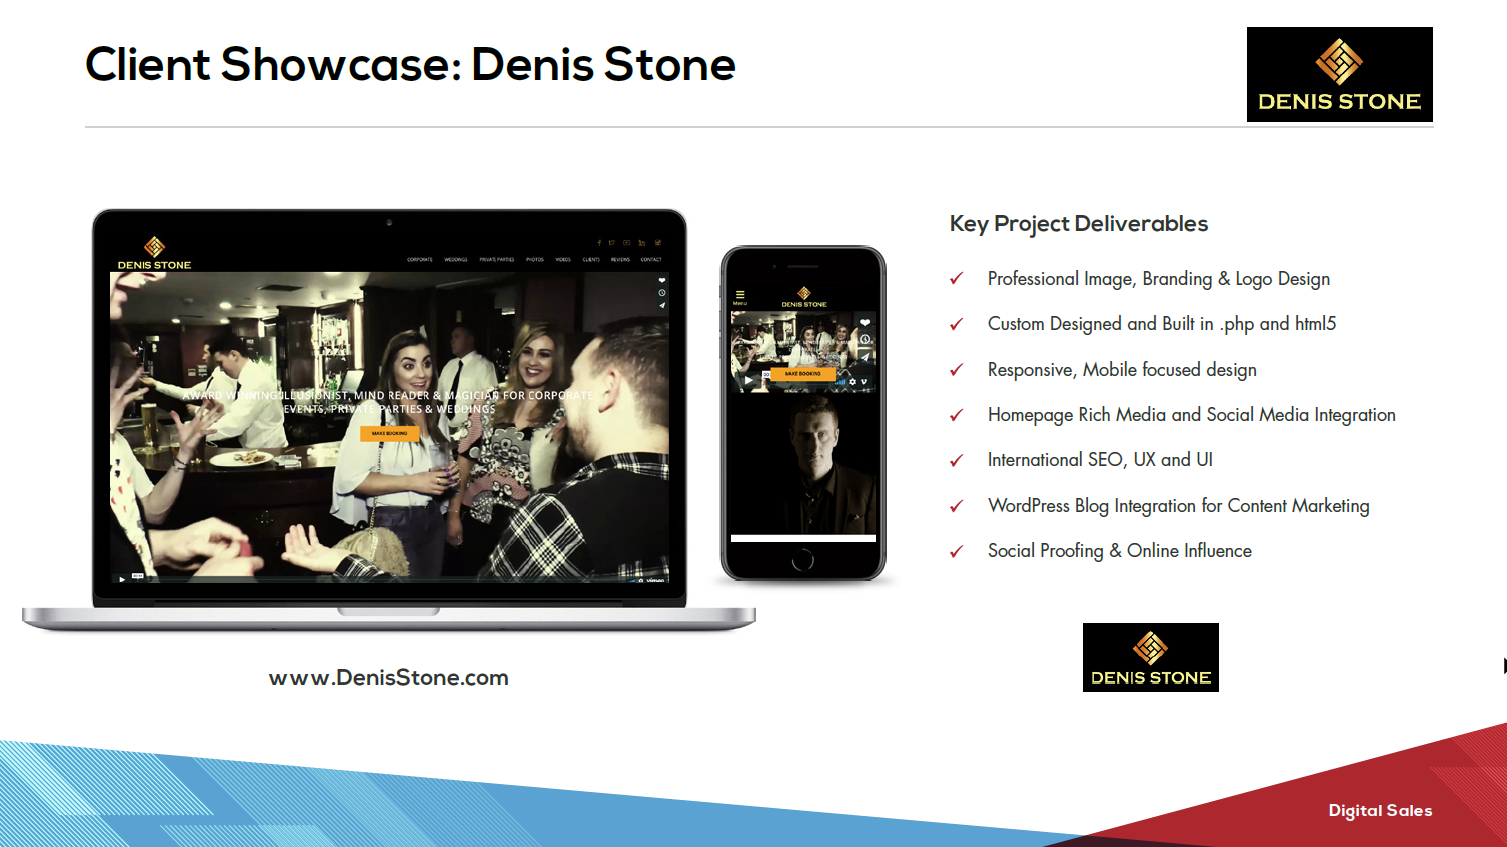 Denis Stone Website Case Study